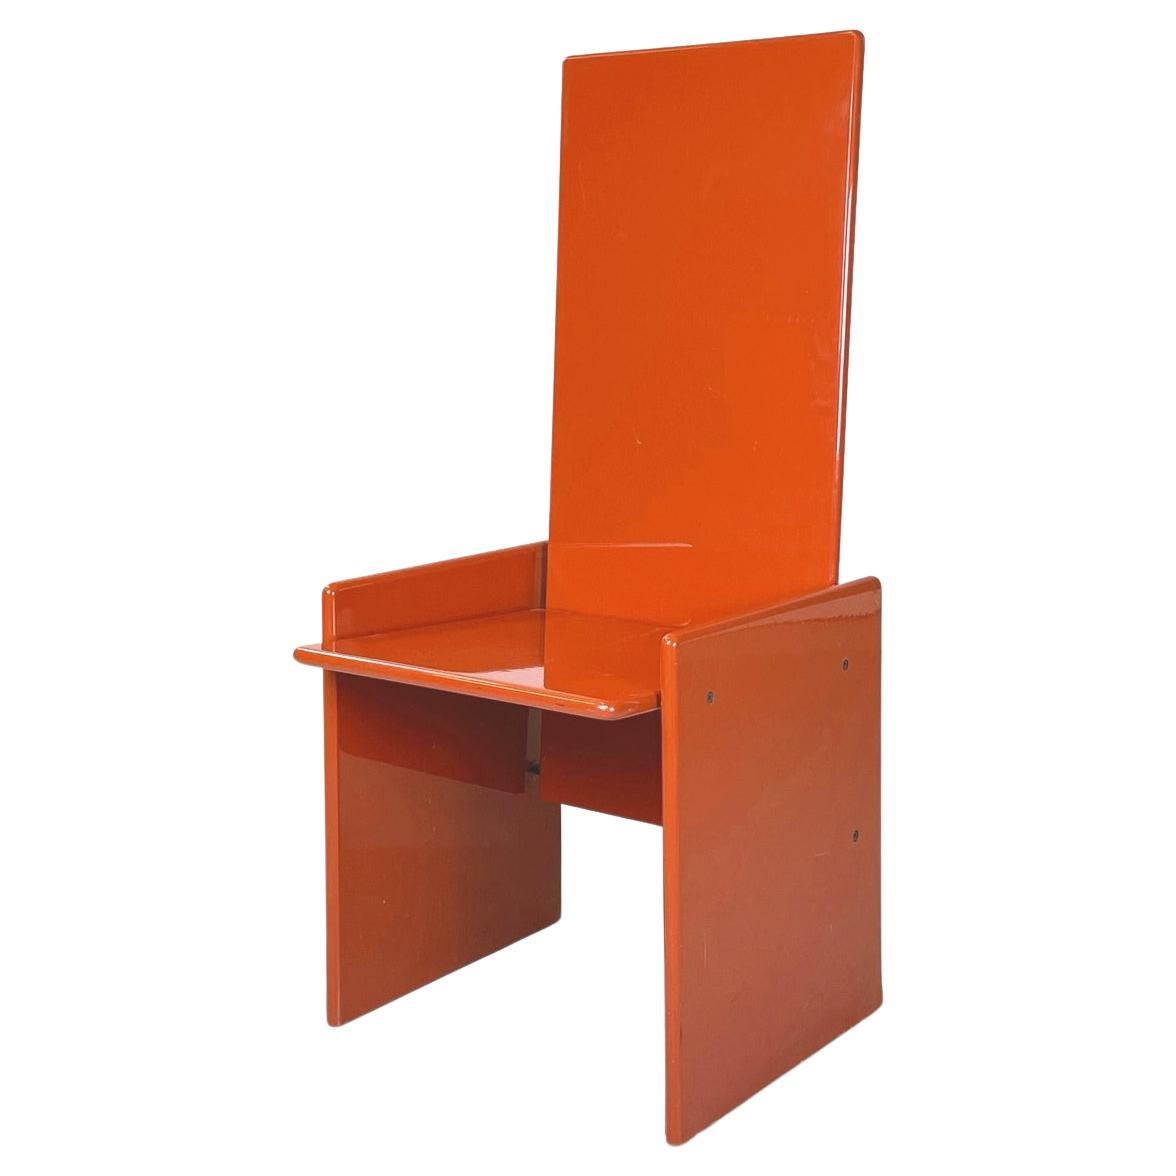 Italian Modern Red Wood Chair Kazuki by Takahama for Simone Gavina, 1960s For Sale